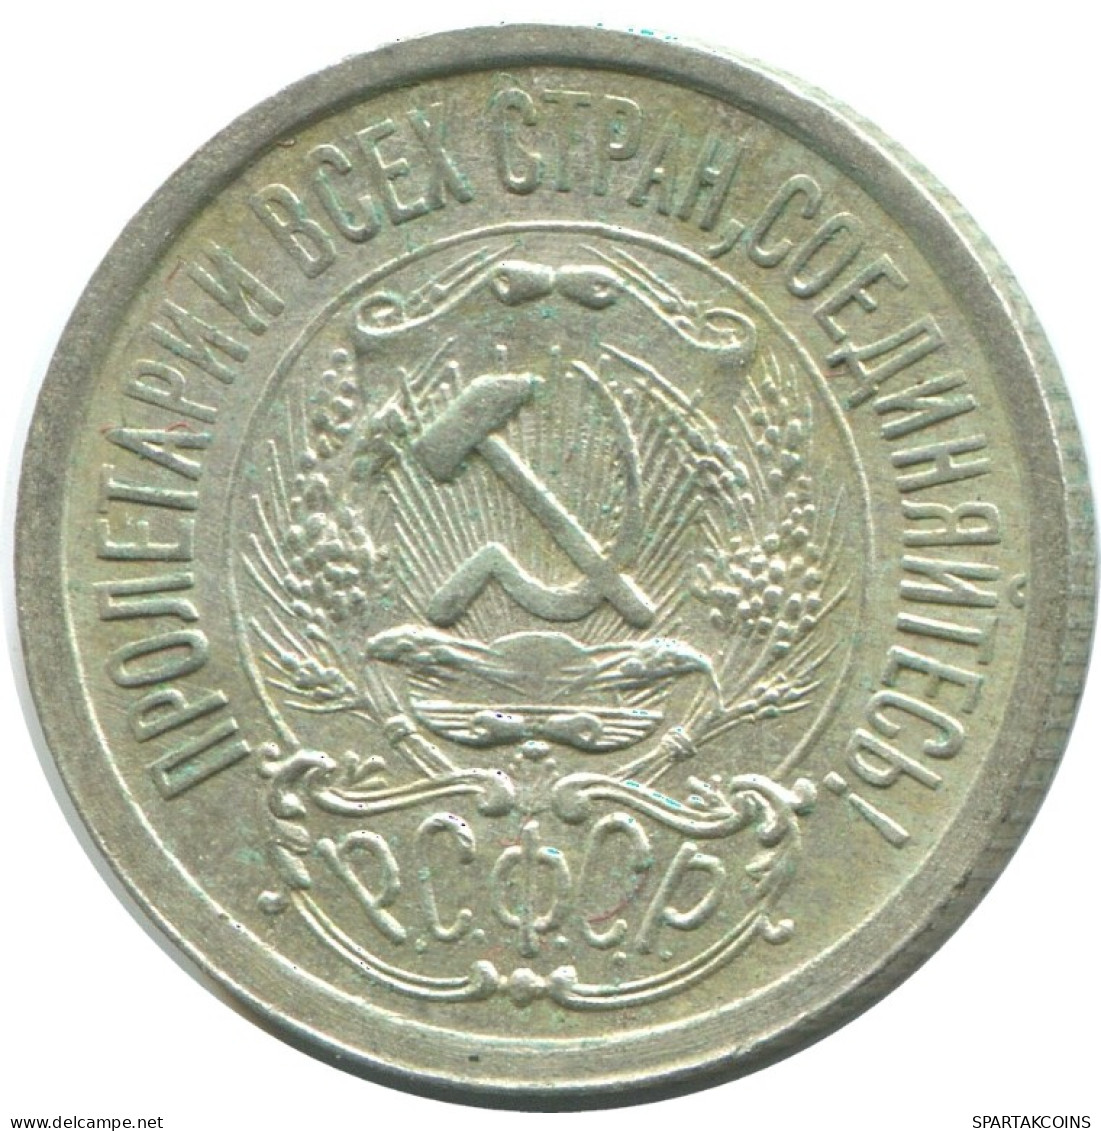 15 KOPEKS 1923 RUSSIA RSFSR SILVER Coin HIGH GRADE #AF021.4.U.A - Russie